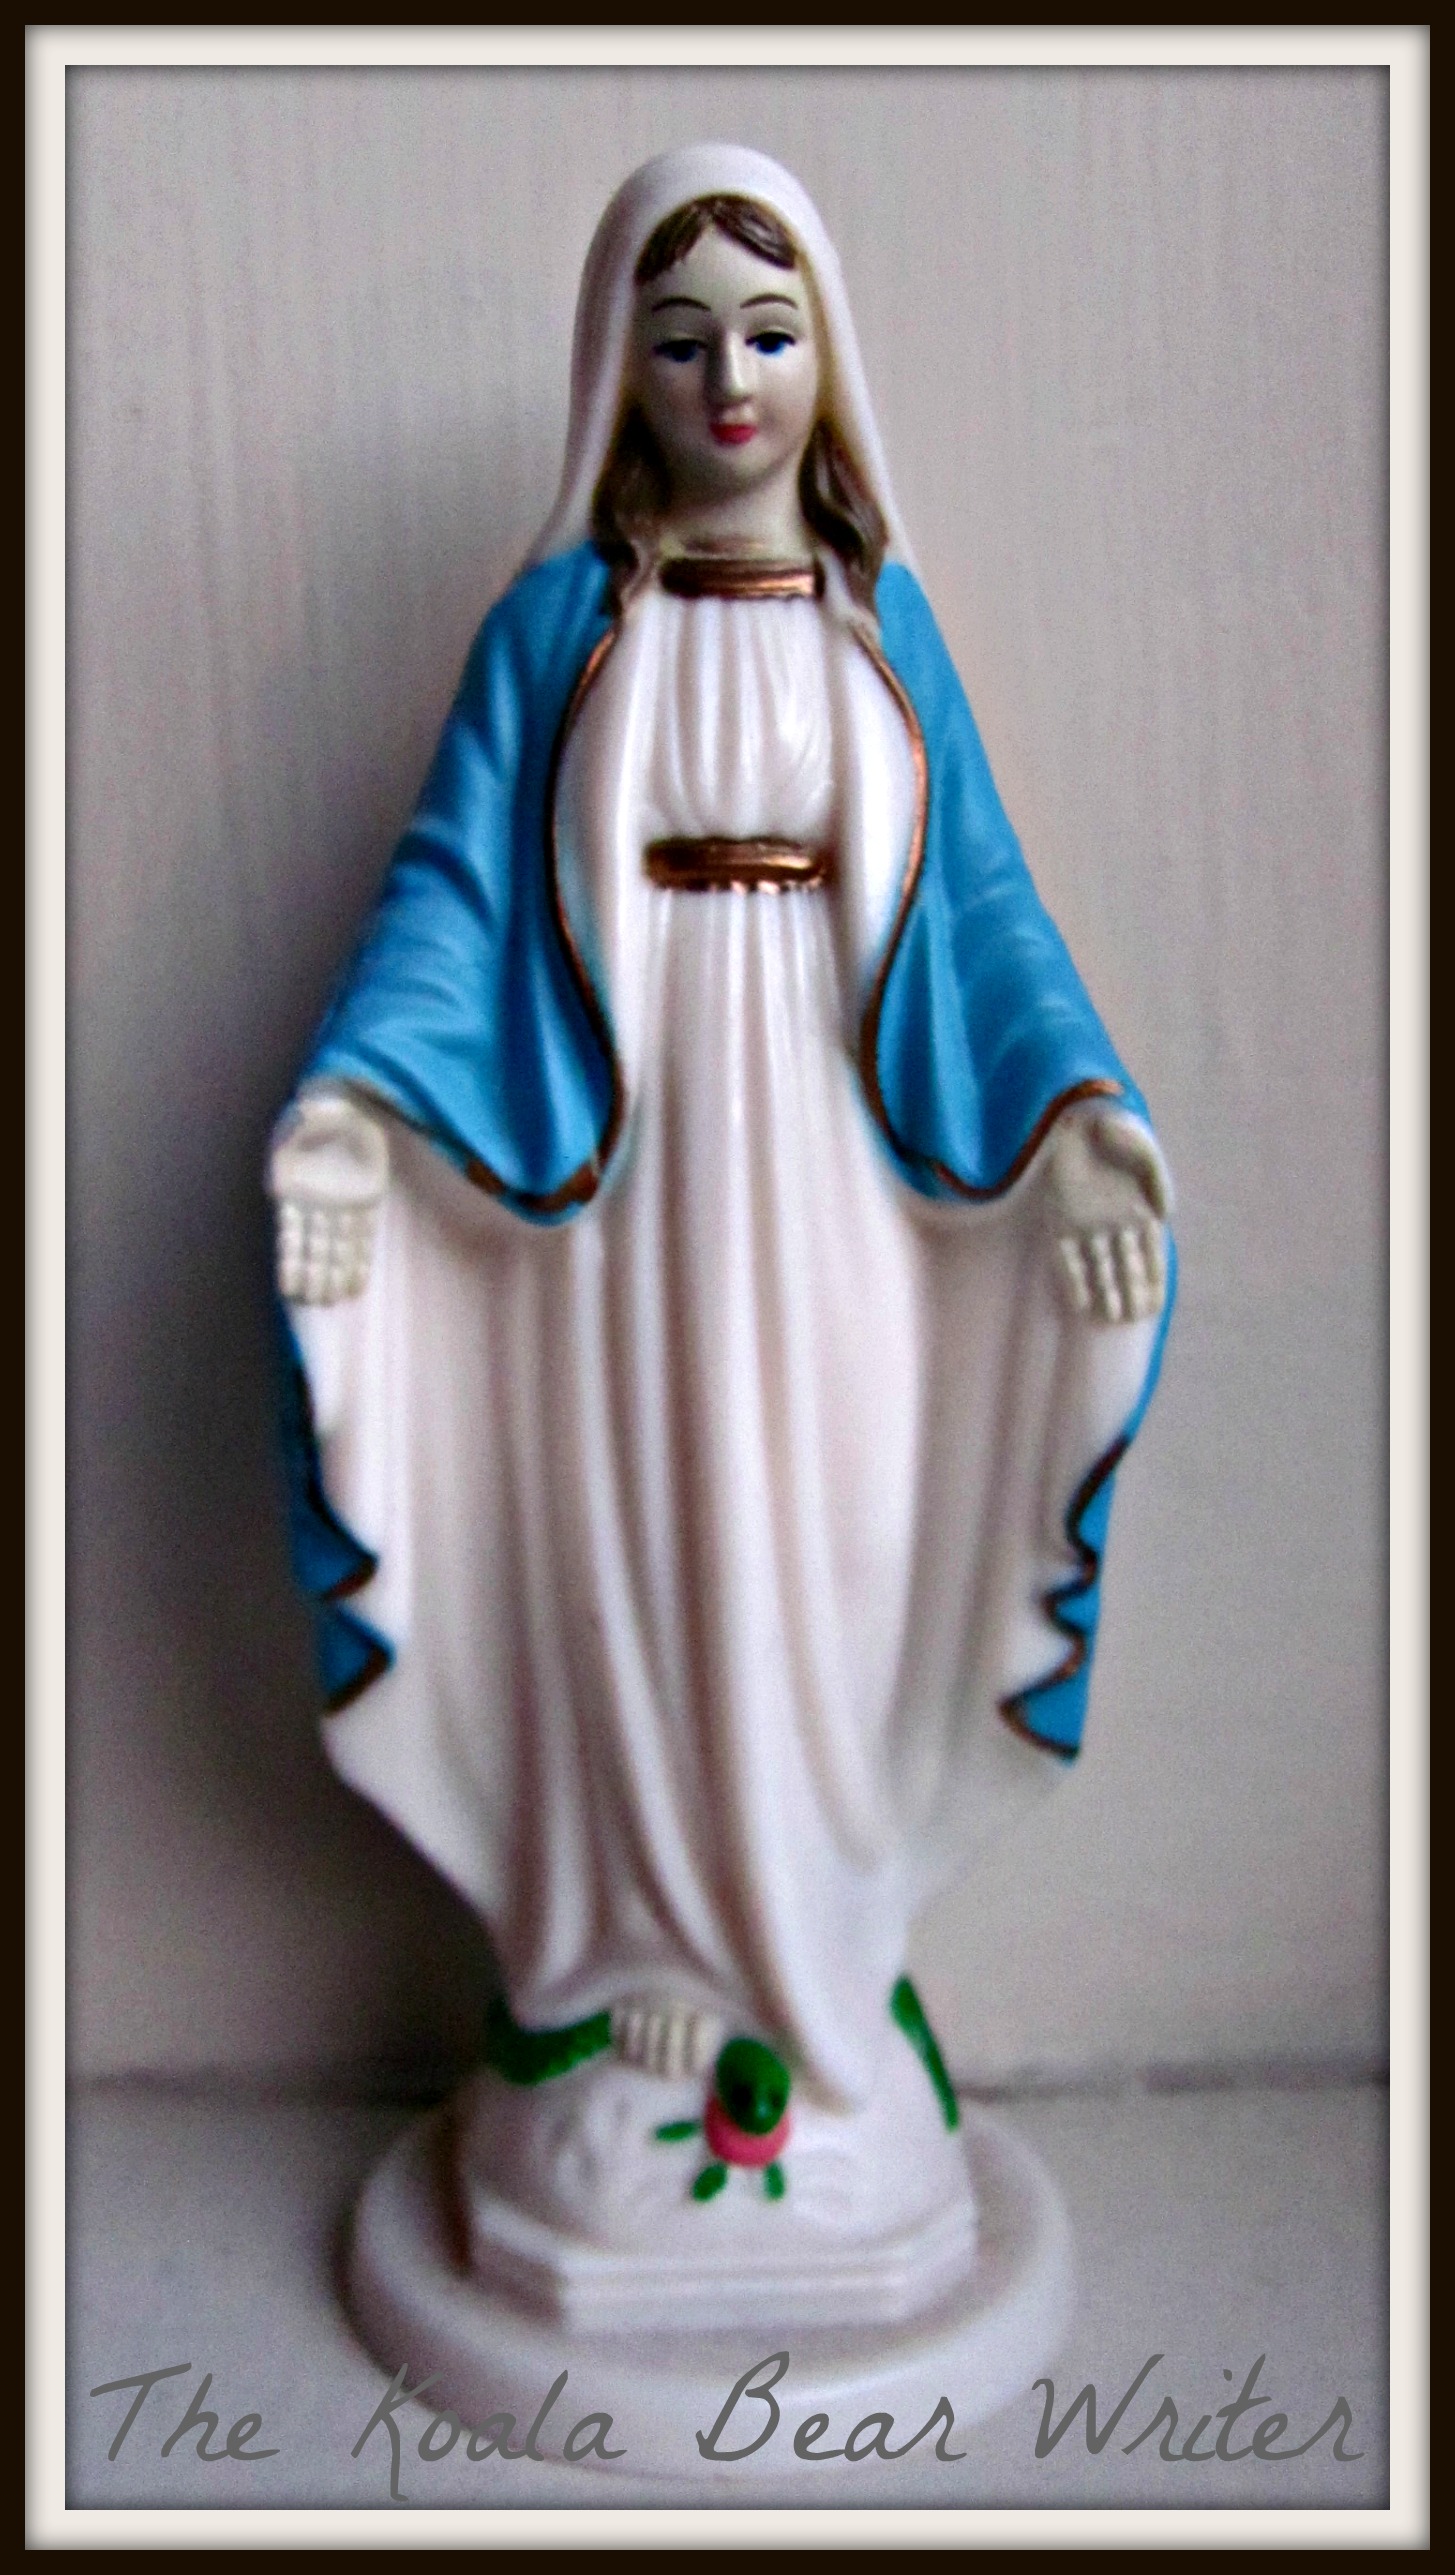 Blue Virgin Mary statue